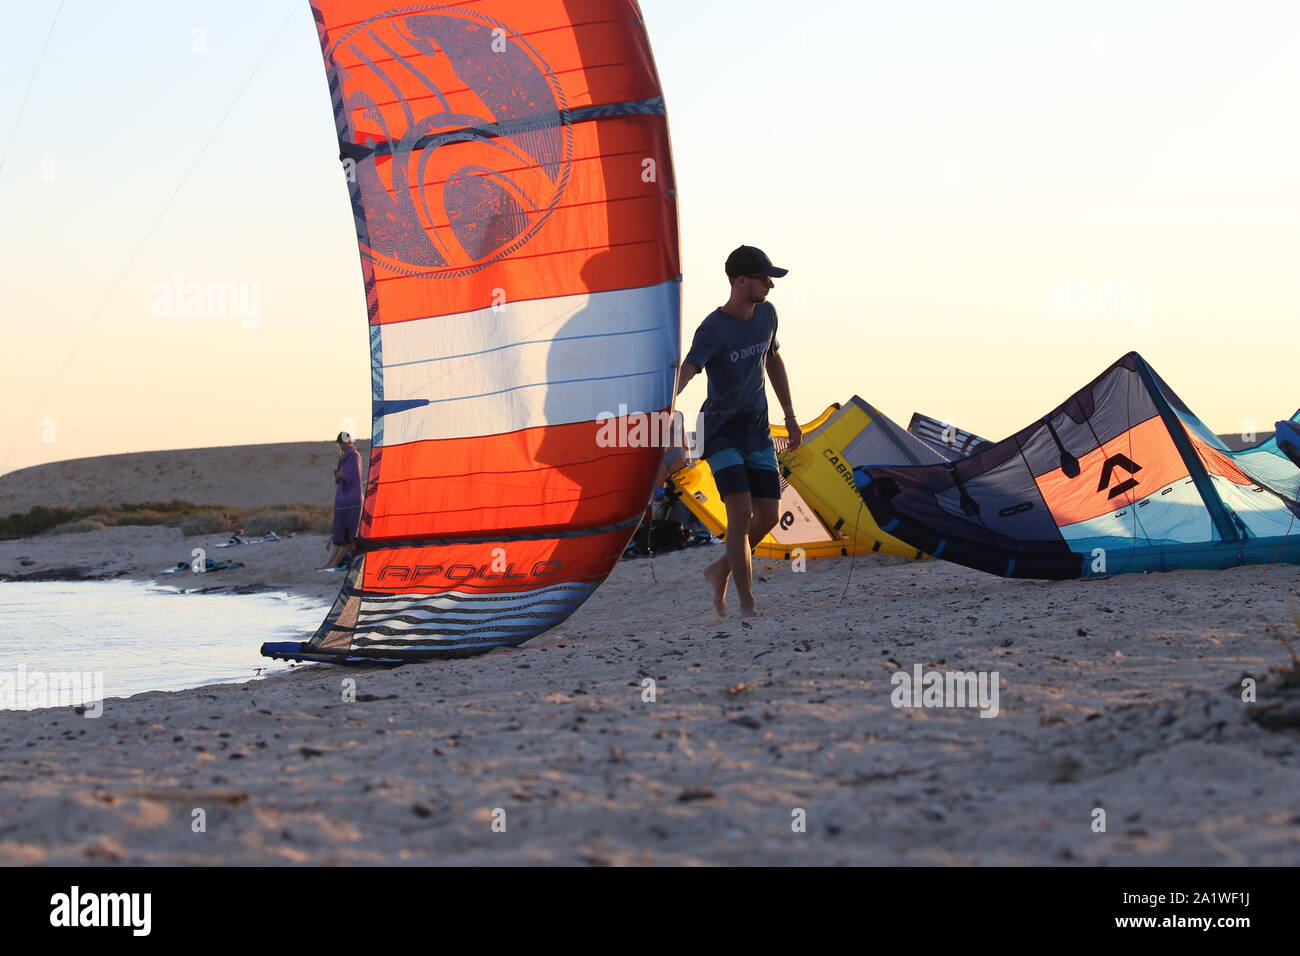 A kitesurfing coach helps safely land a colourful kite on an Egyptian beach island Stock Photo